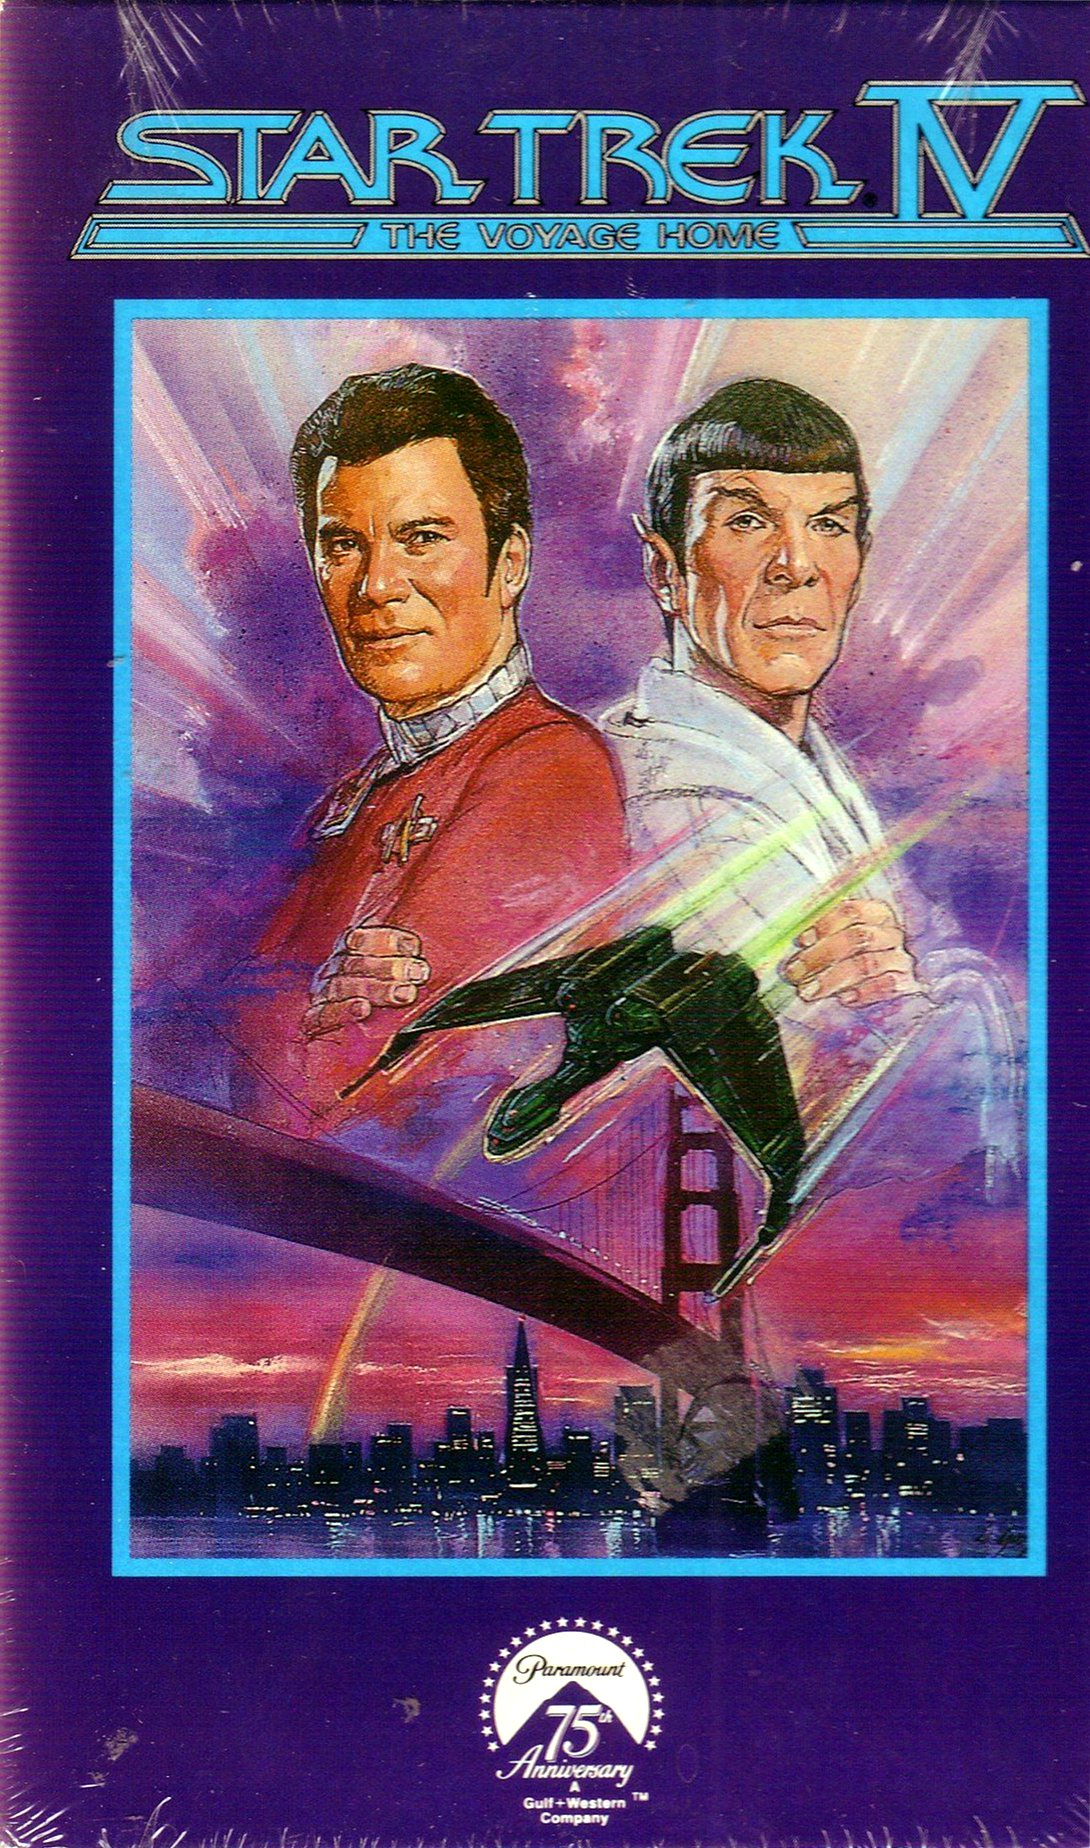 Star Trek IV: The Voyage Home wallpaper, Movie, HQ Star Trek IV: The Voyage Home pictureK Wallpaper 2019